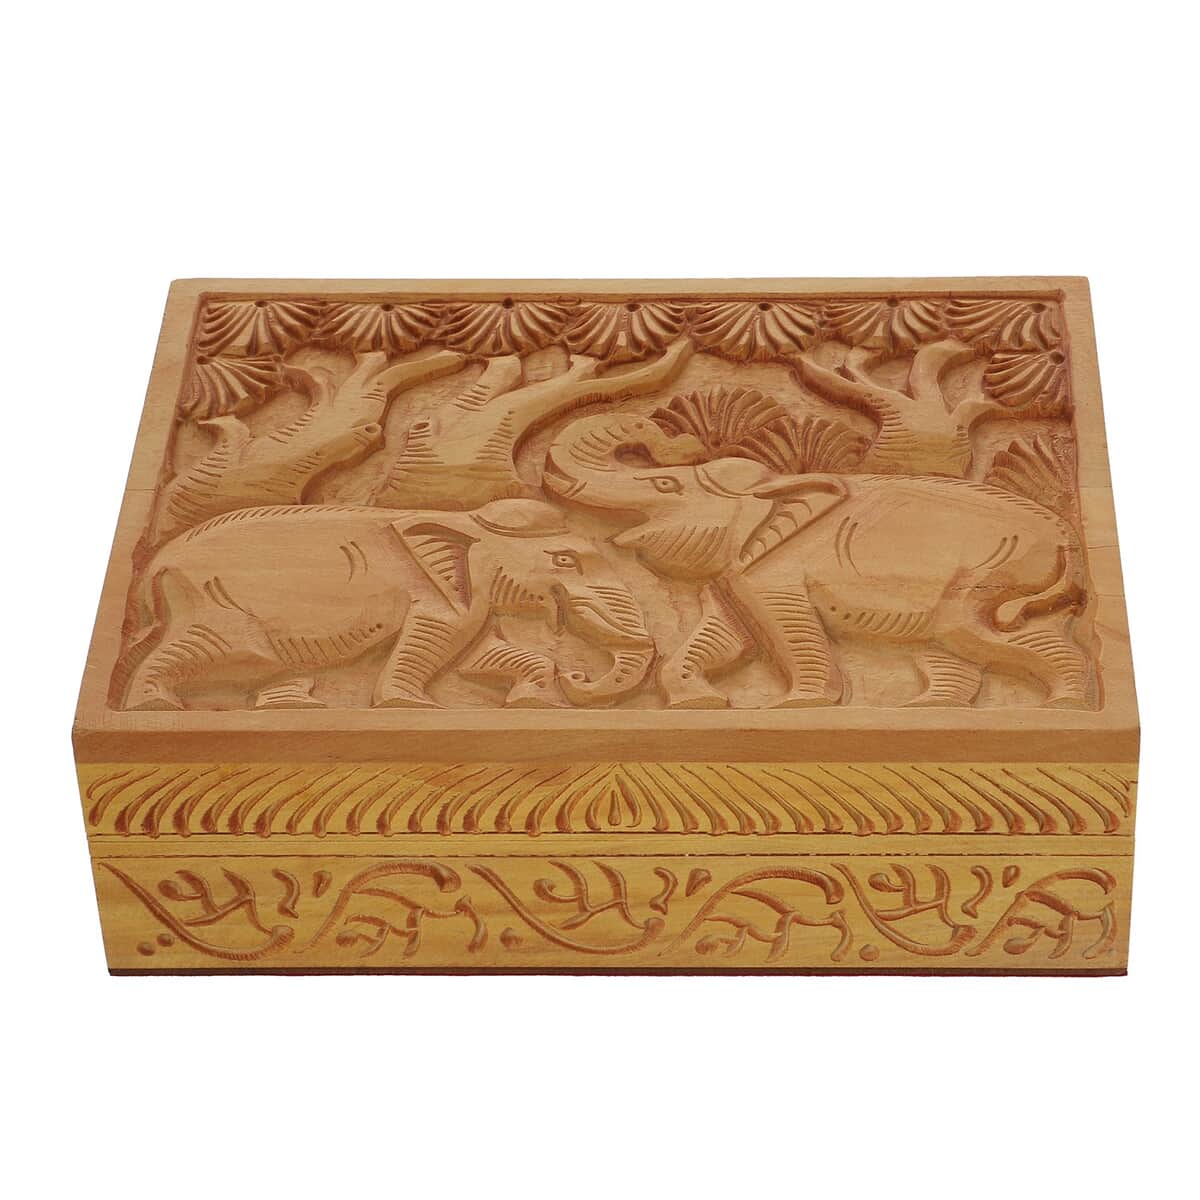 Haldu Wood Made Hand Carved Elephant Embossed Carved Storage Box (8"x6"x2.5") image number 2